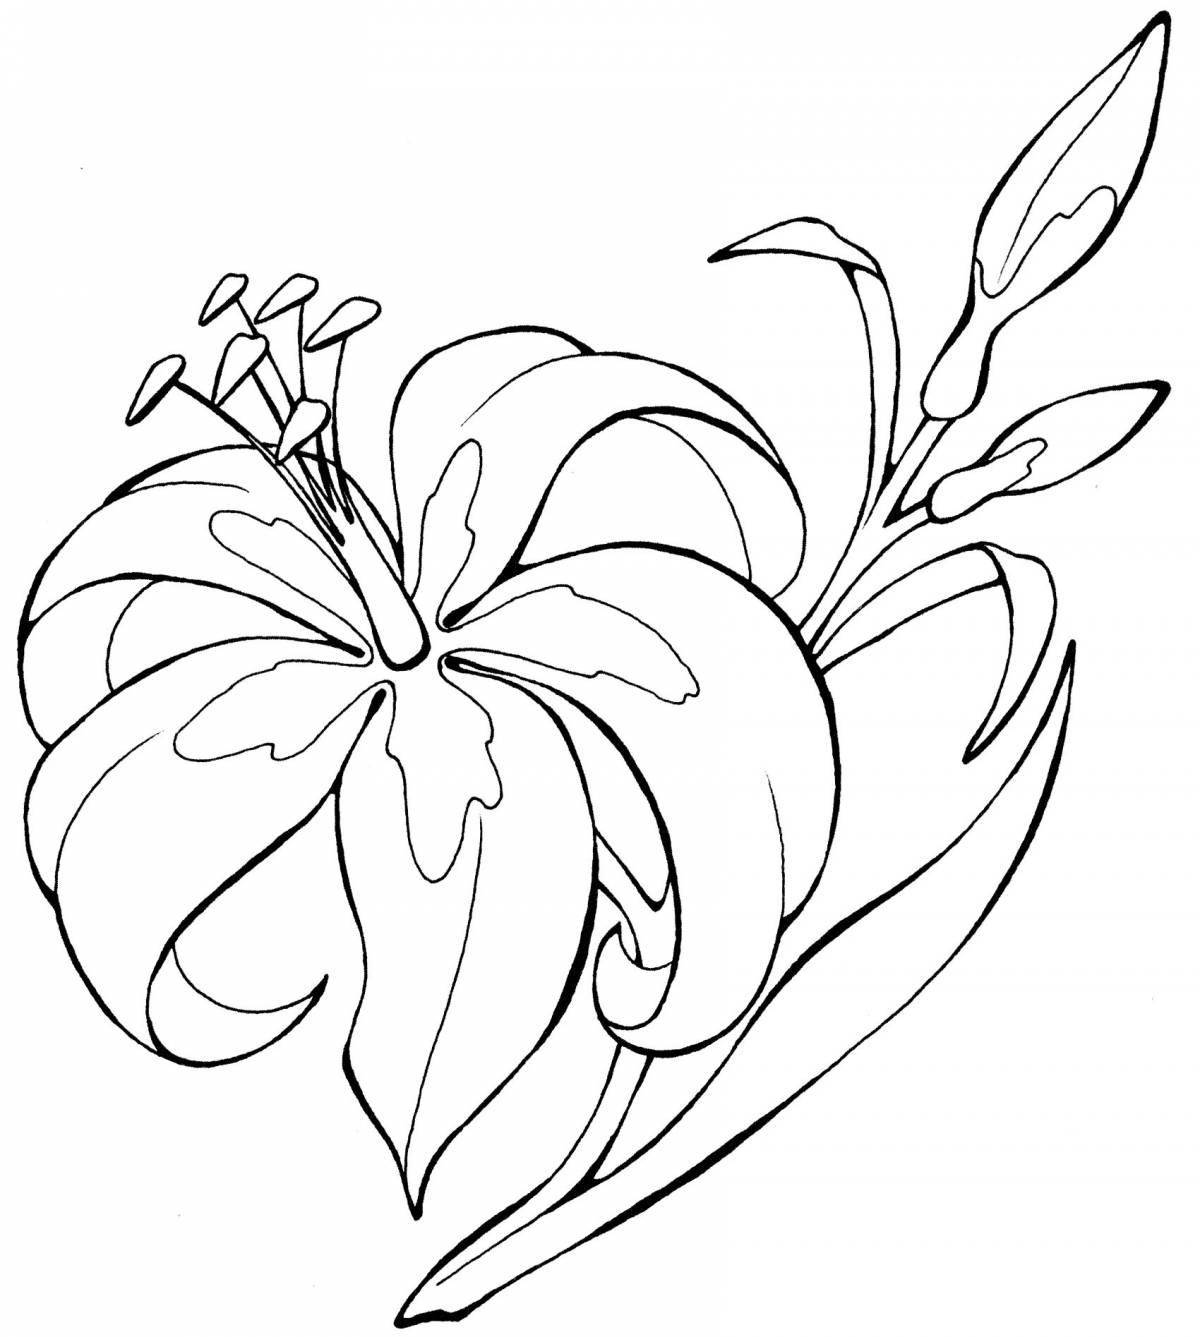 Coloring book beautiful lily saranka